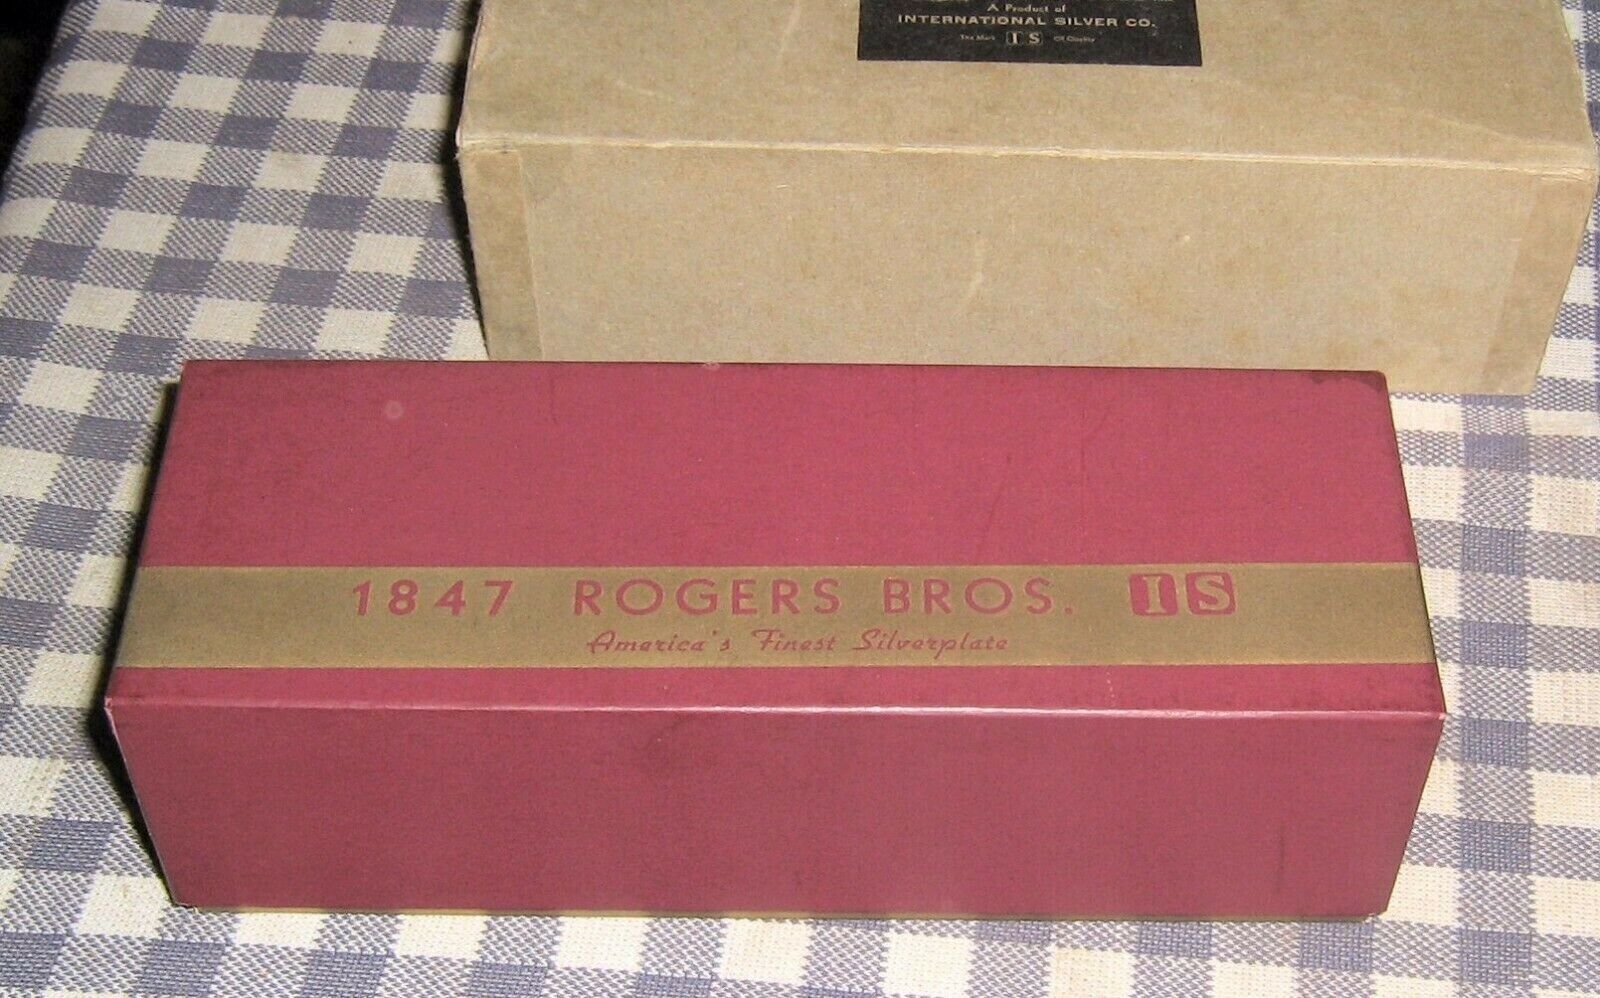 1847 Rogers Bros.Silver-plate Ladle,Serving Spoon,IS,International,Original Box